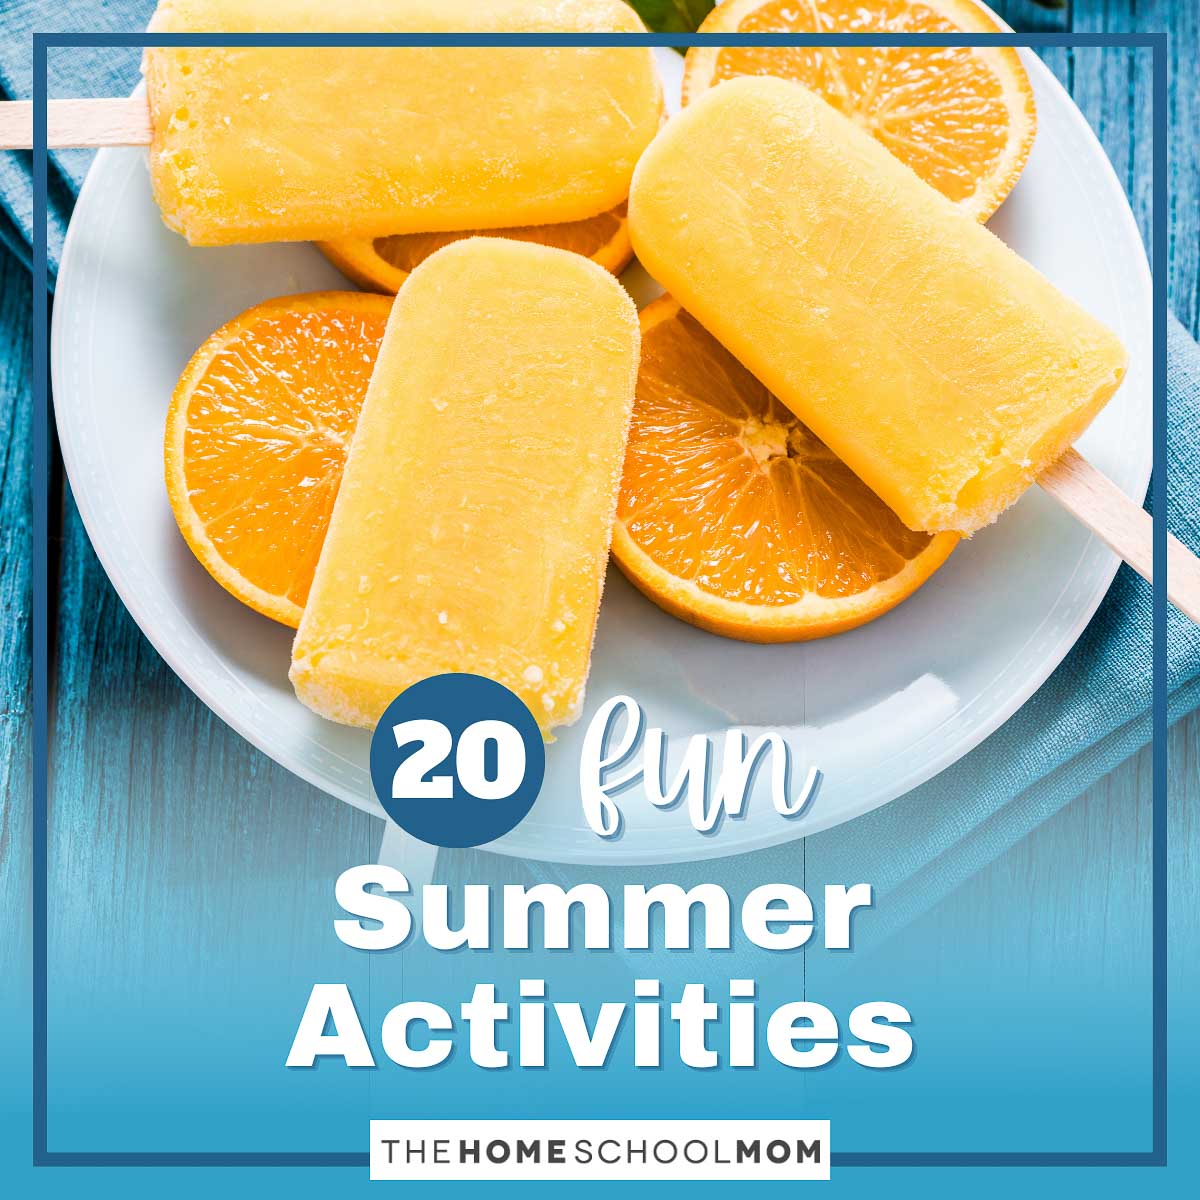 20 Fun Summer Activities